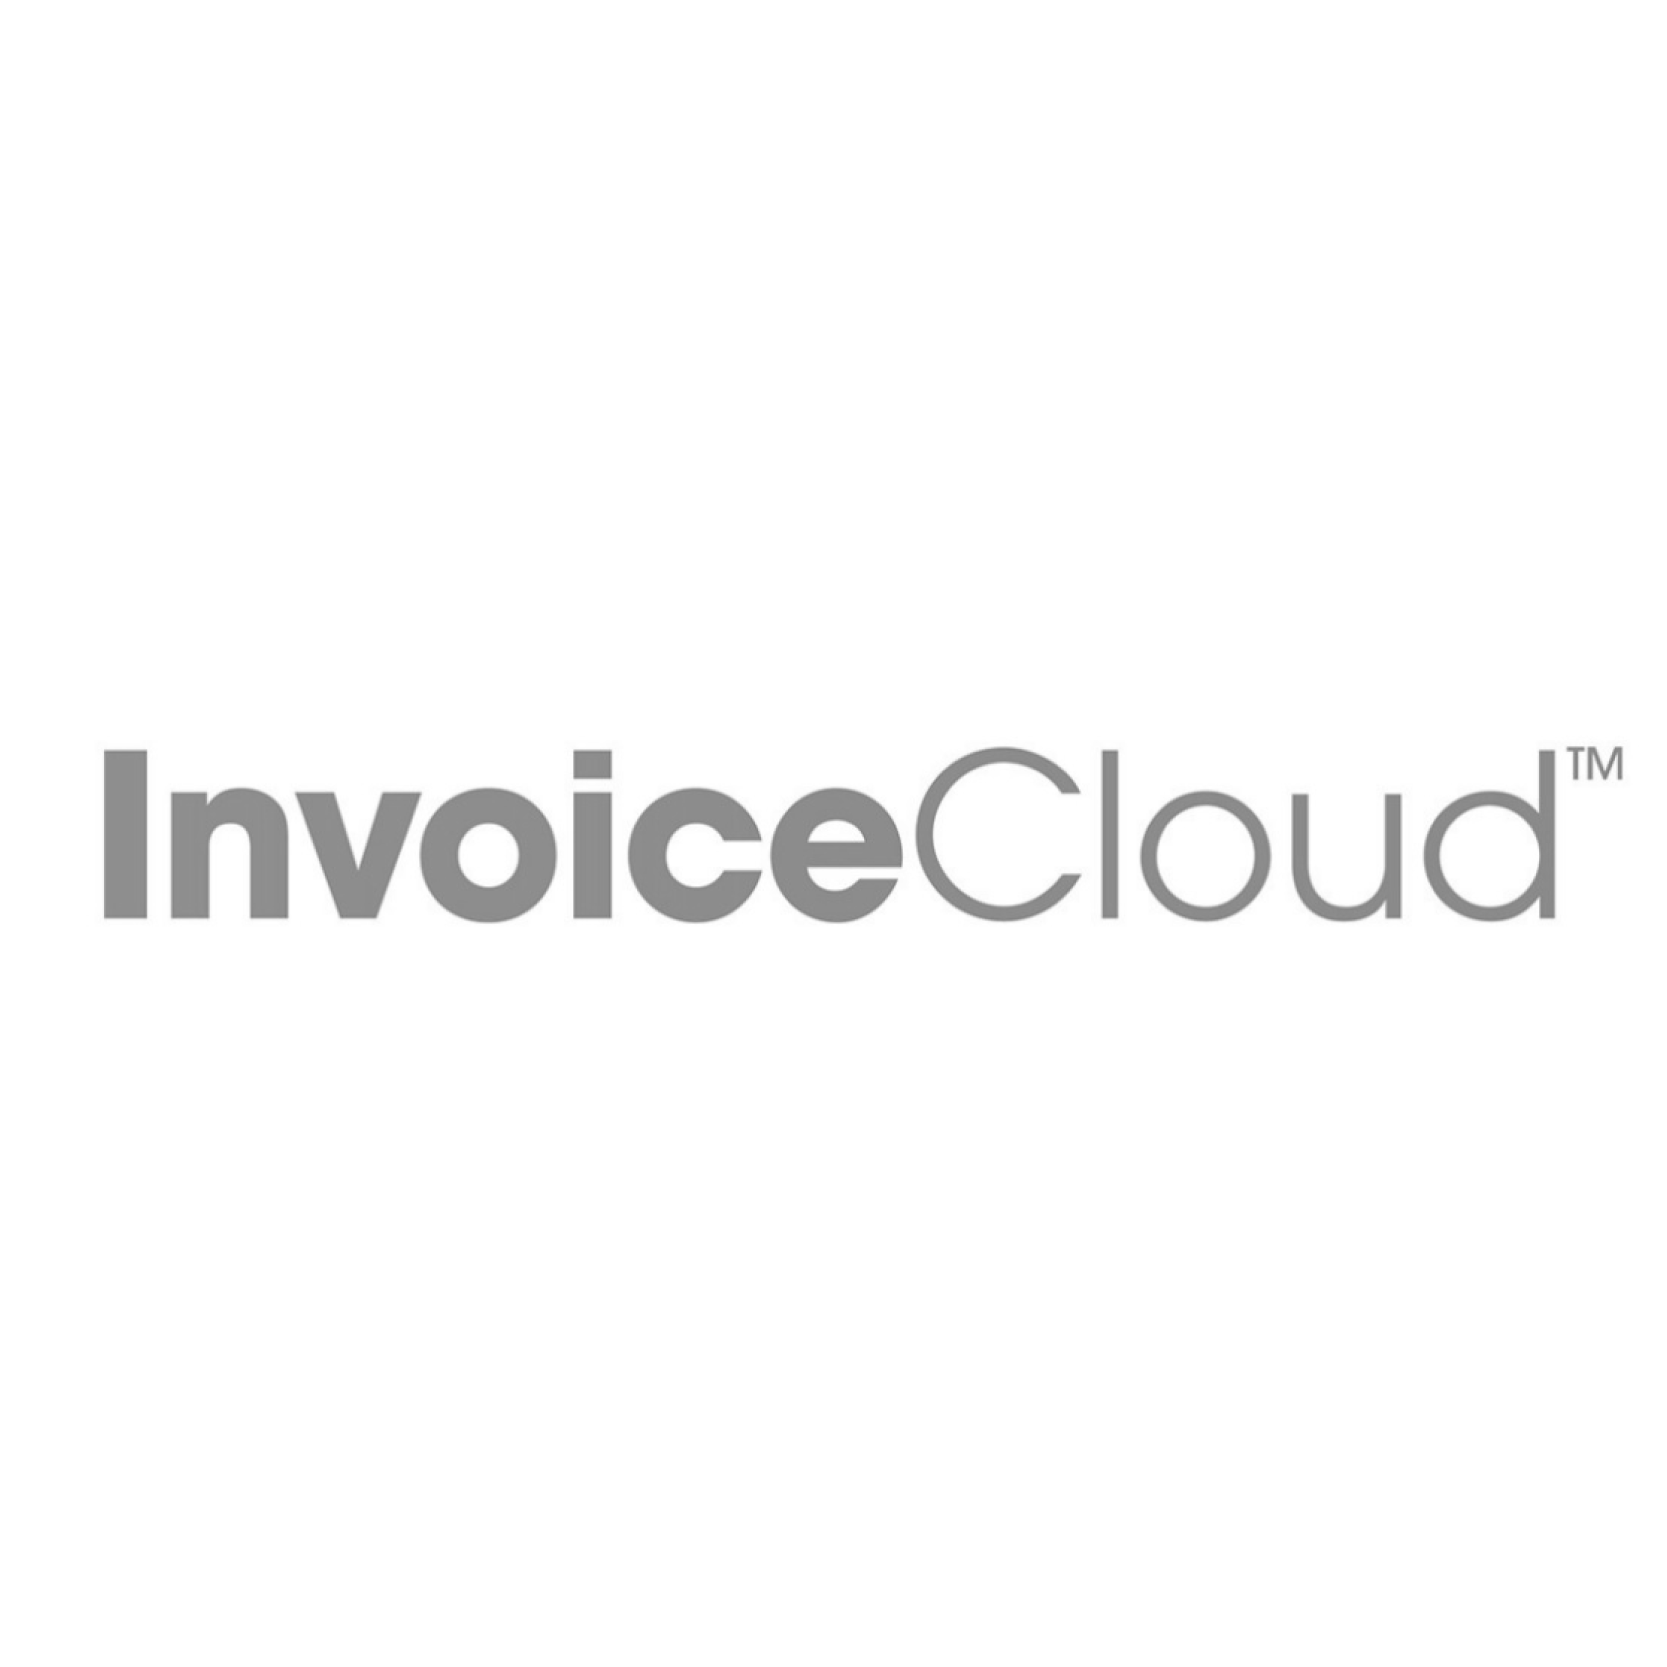 InvoiceCloud-01